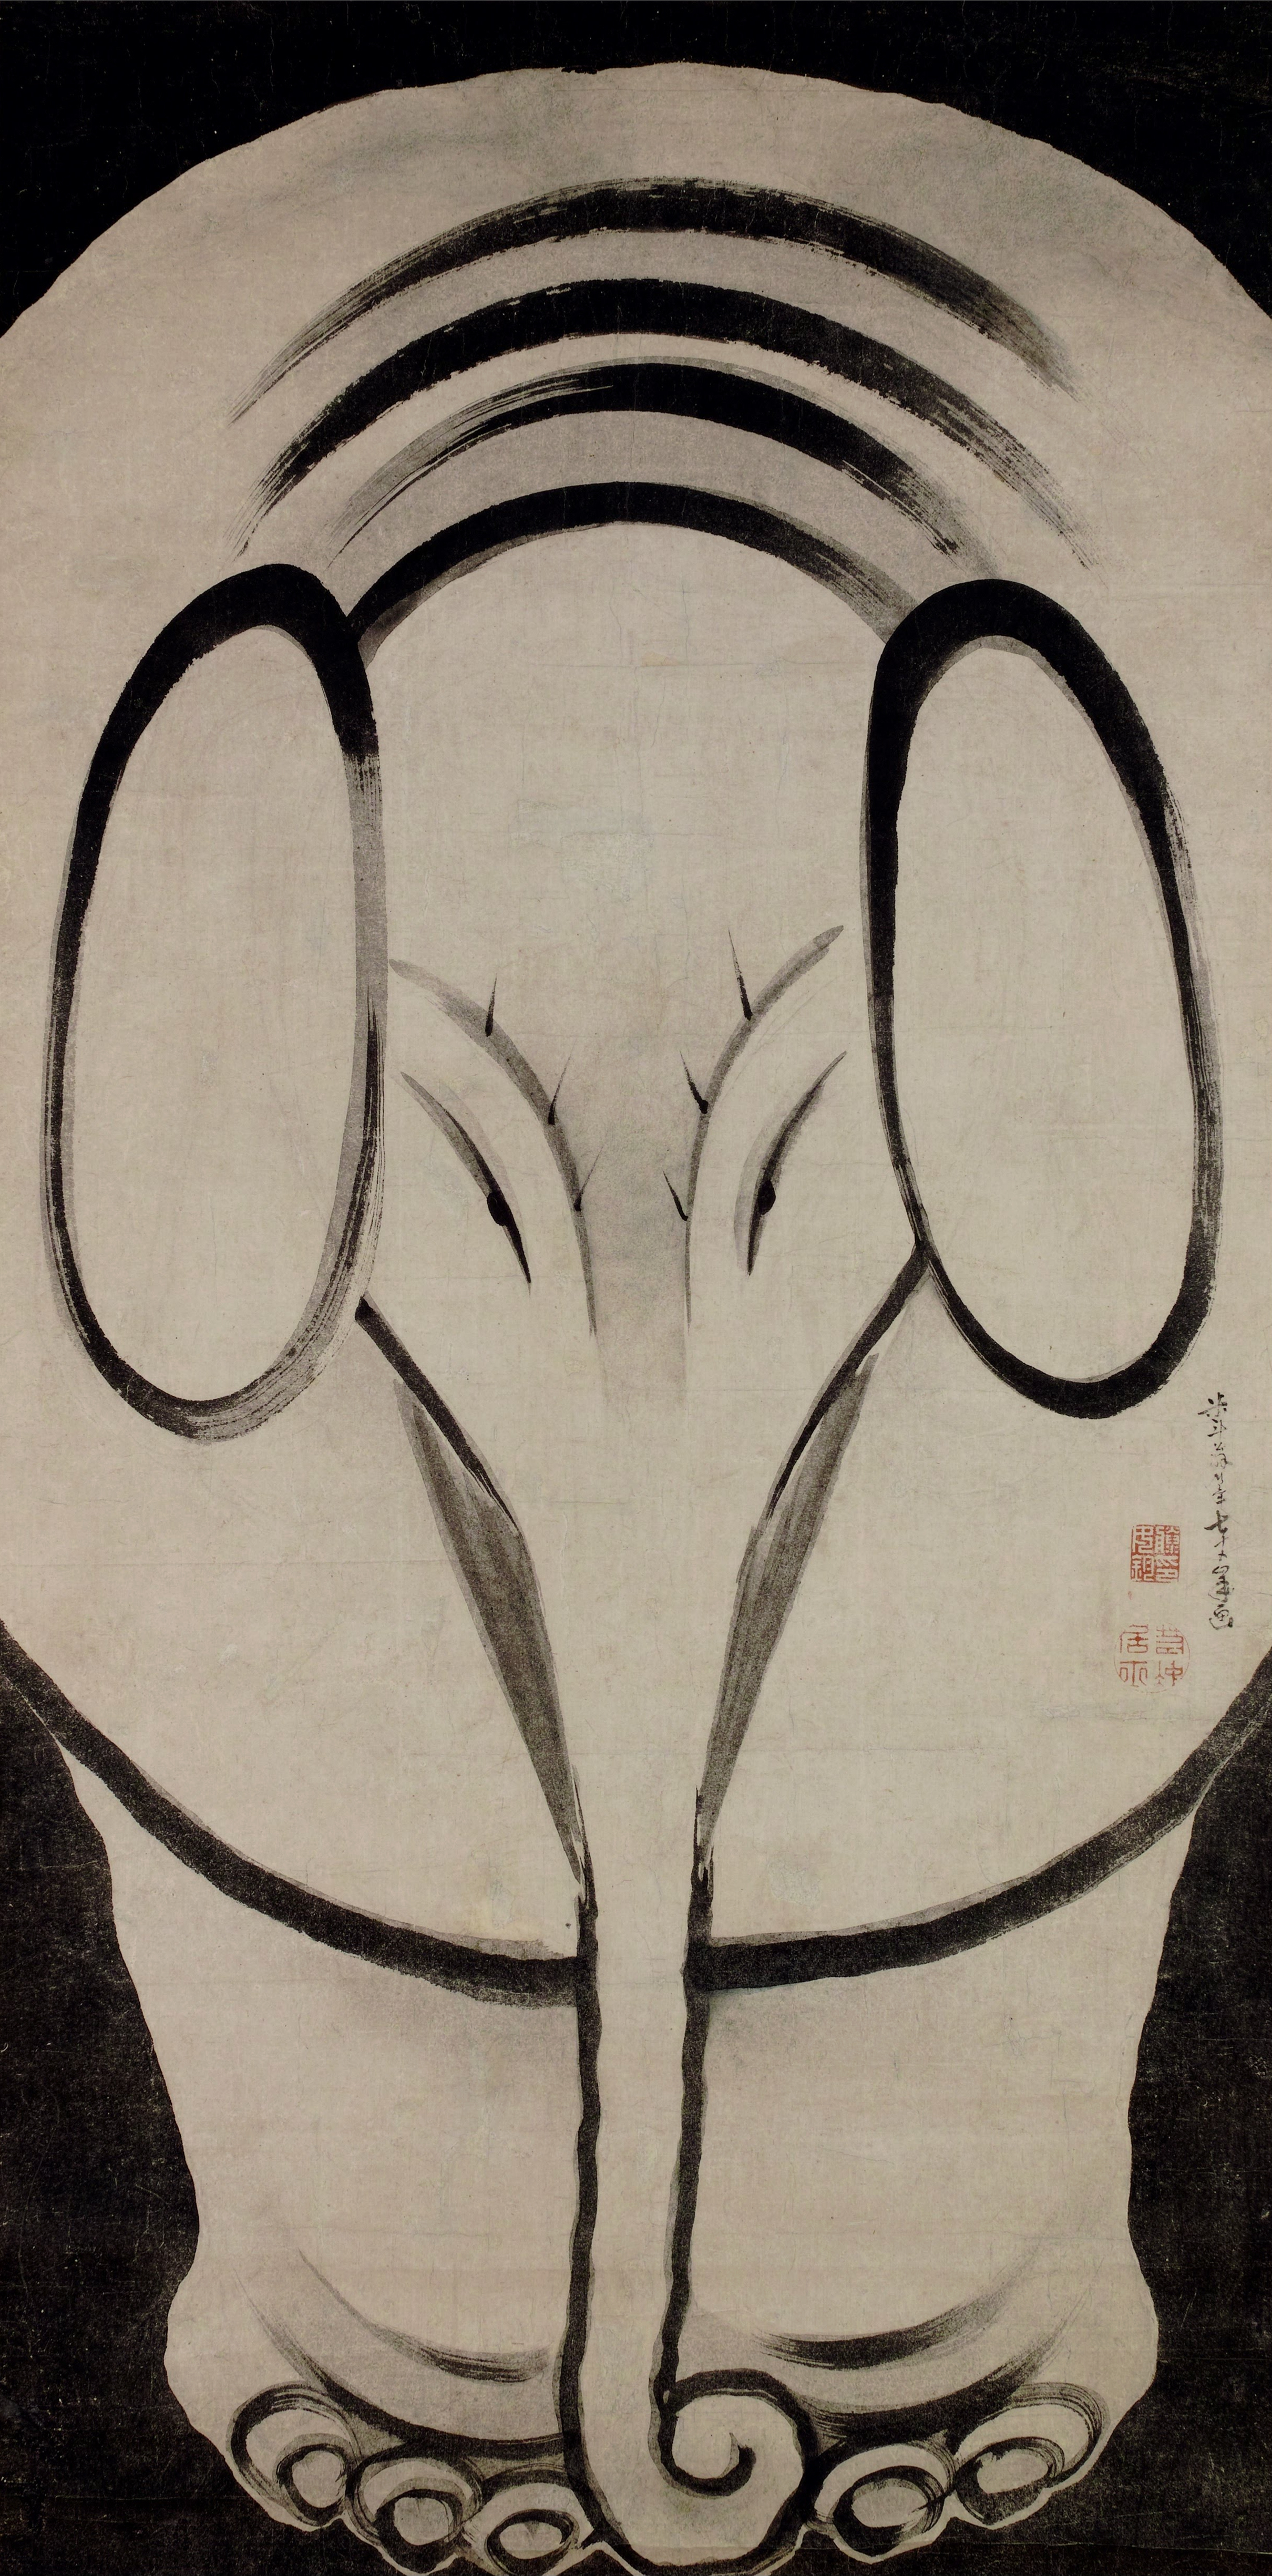 Слон by Itō Jakuchū - 1790. - 155.5 cm × 77.3 cm 